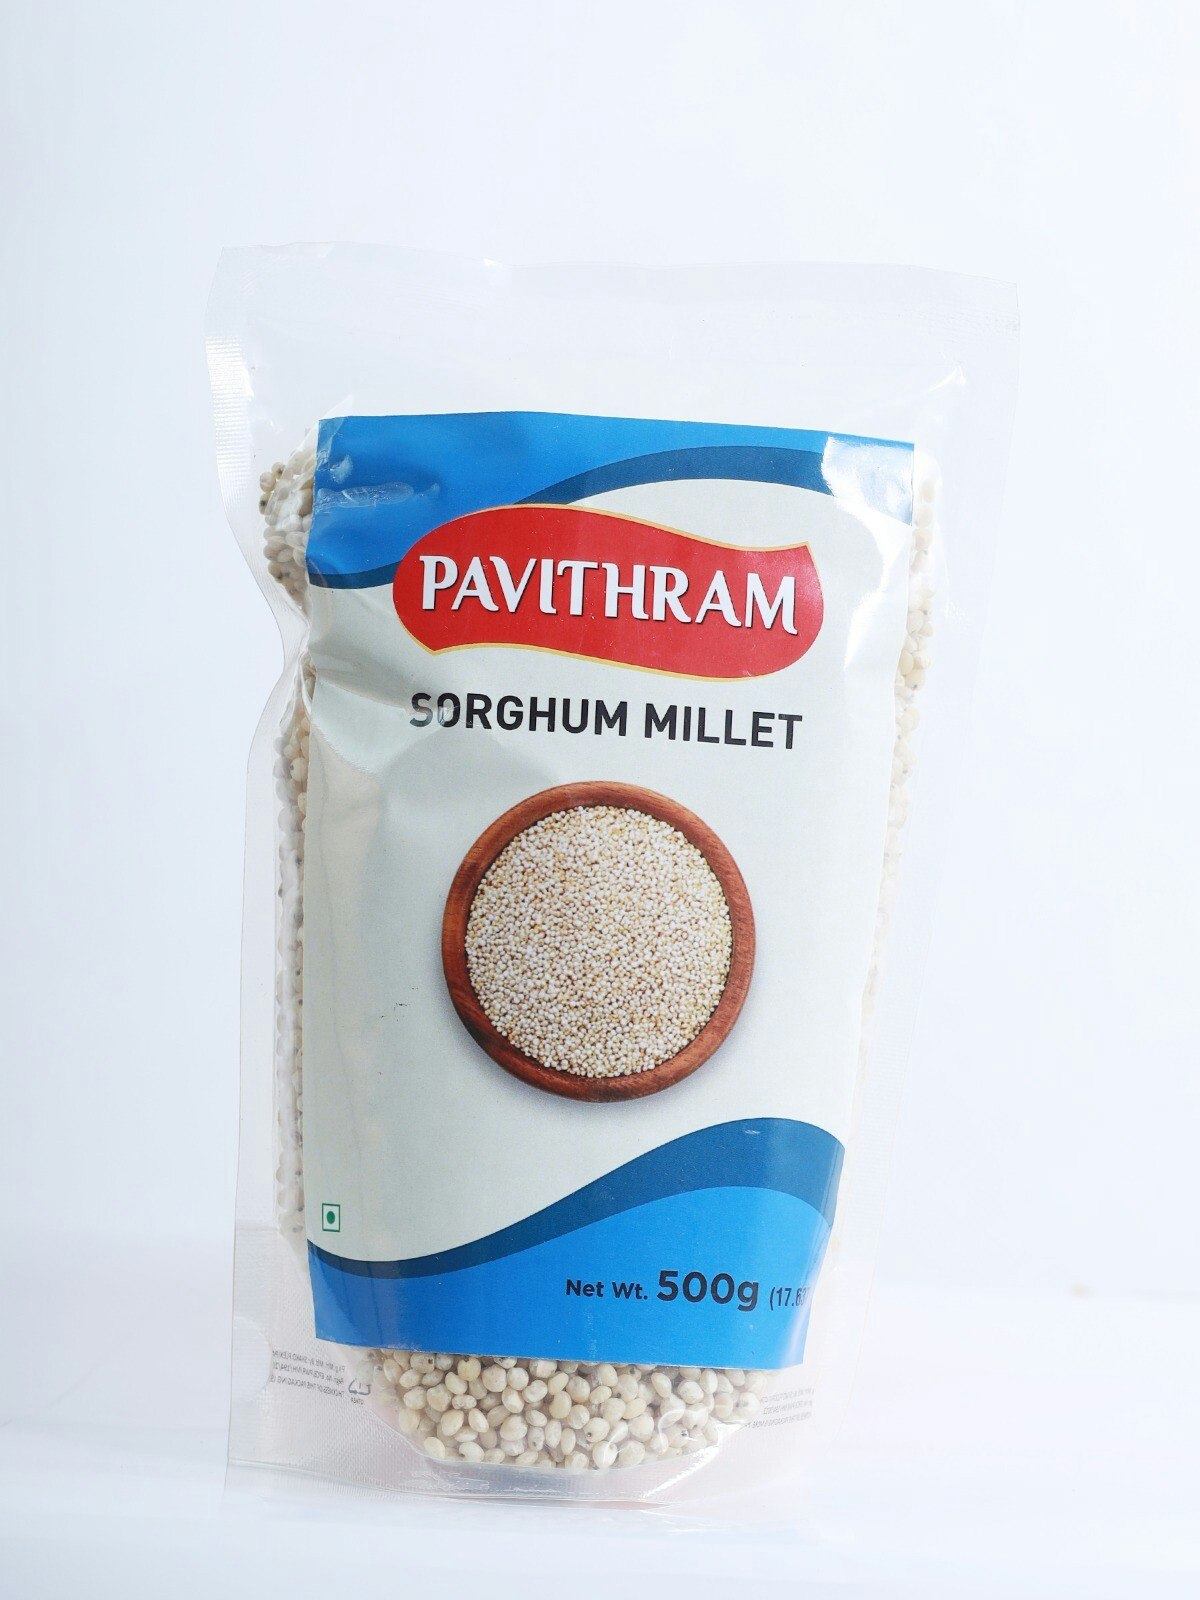 Sorghum Millet (Pavithram)  500g